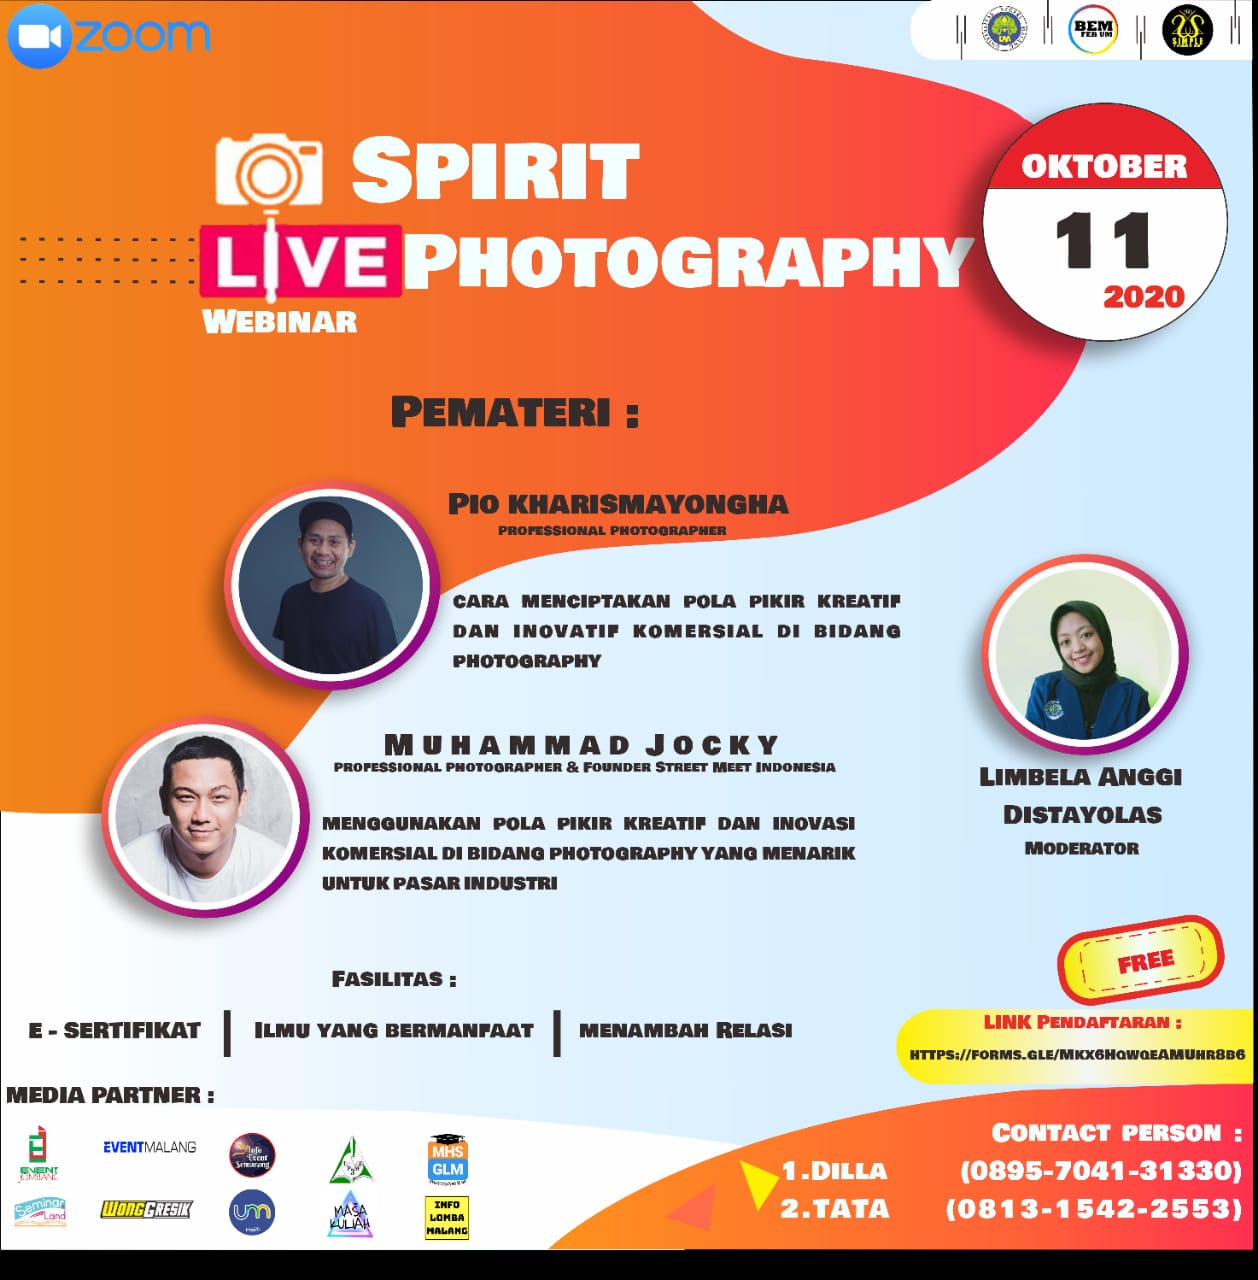 SIMPLE presents Photography Webinar - Spirit Photography